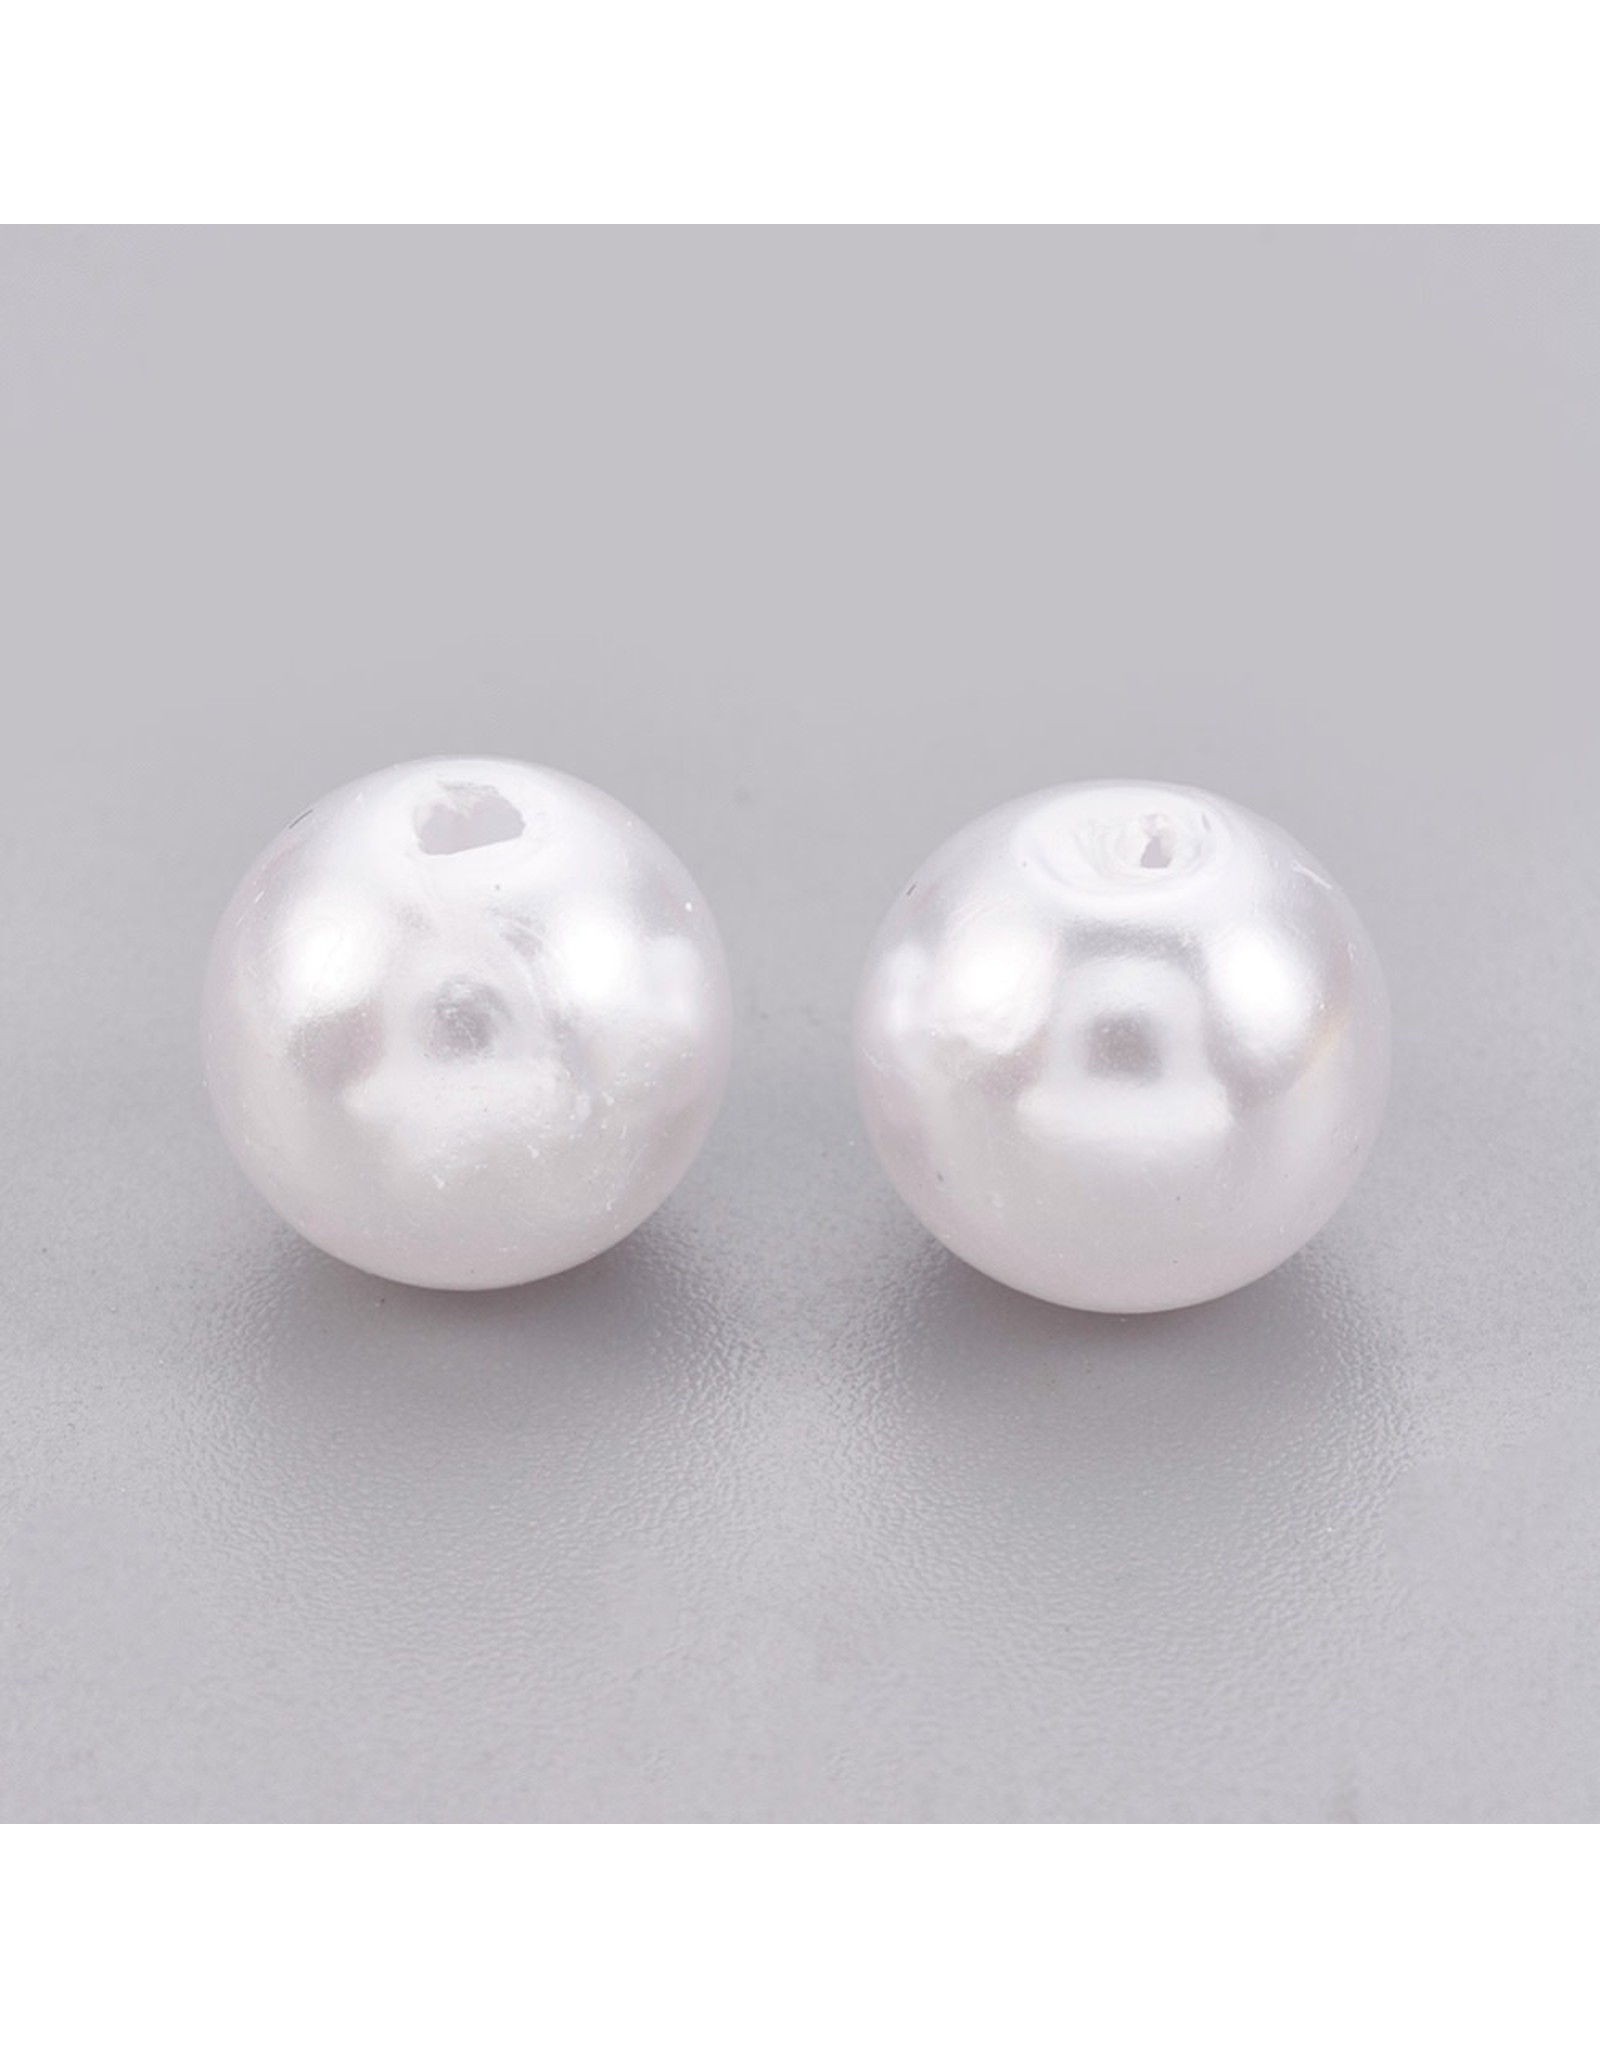 Craft Pearls  18mm White  x12